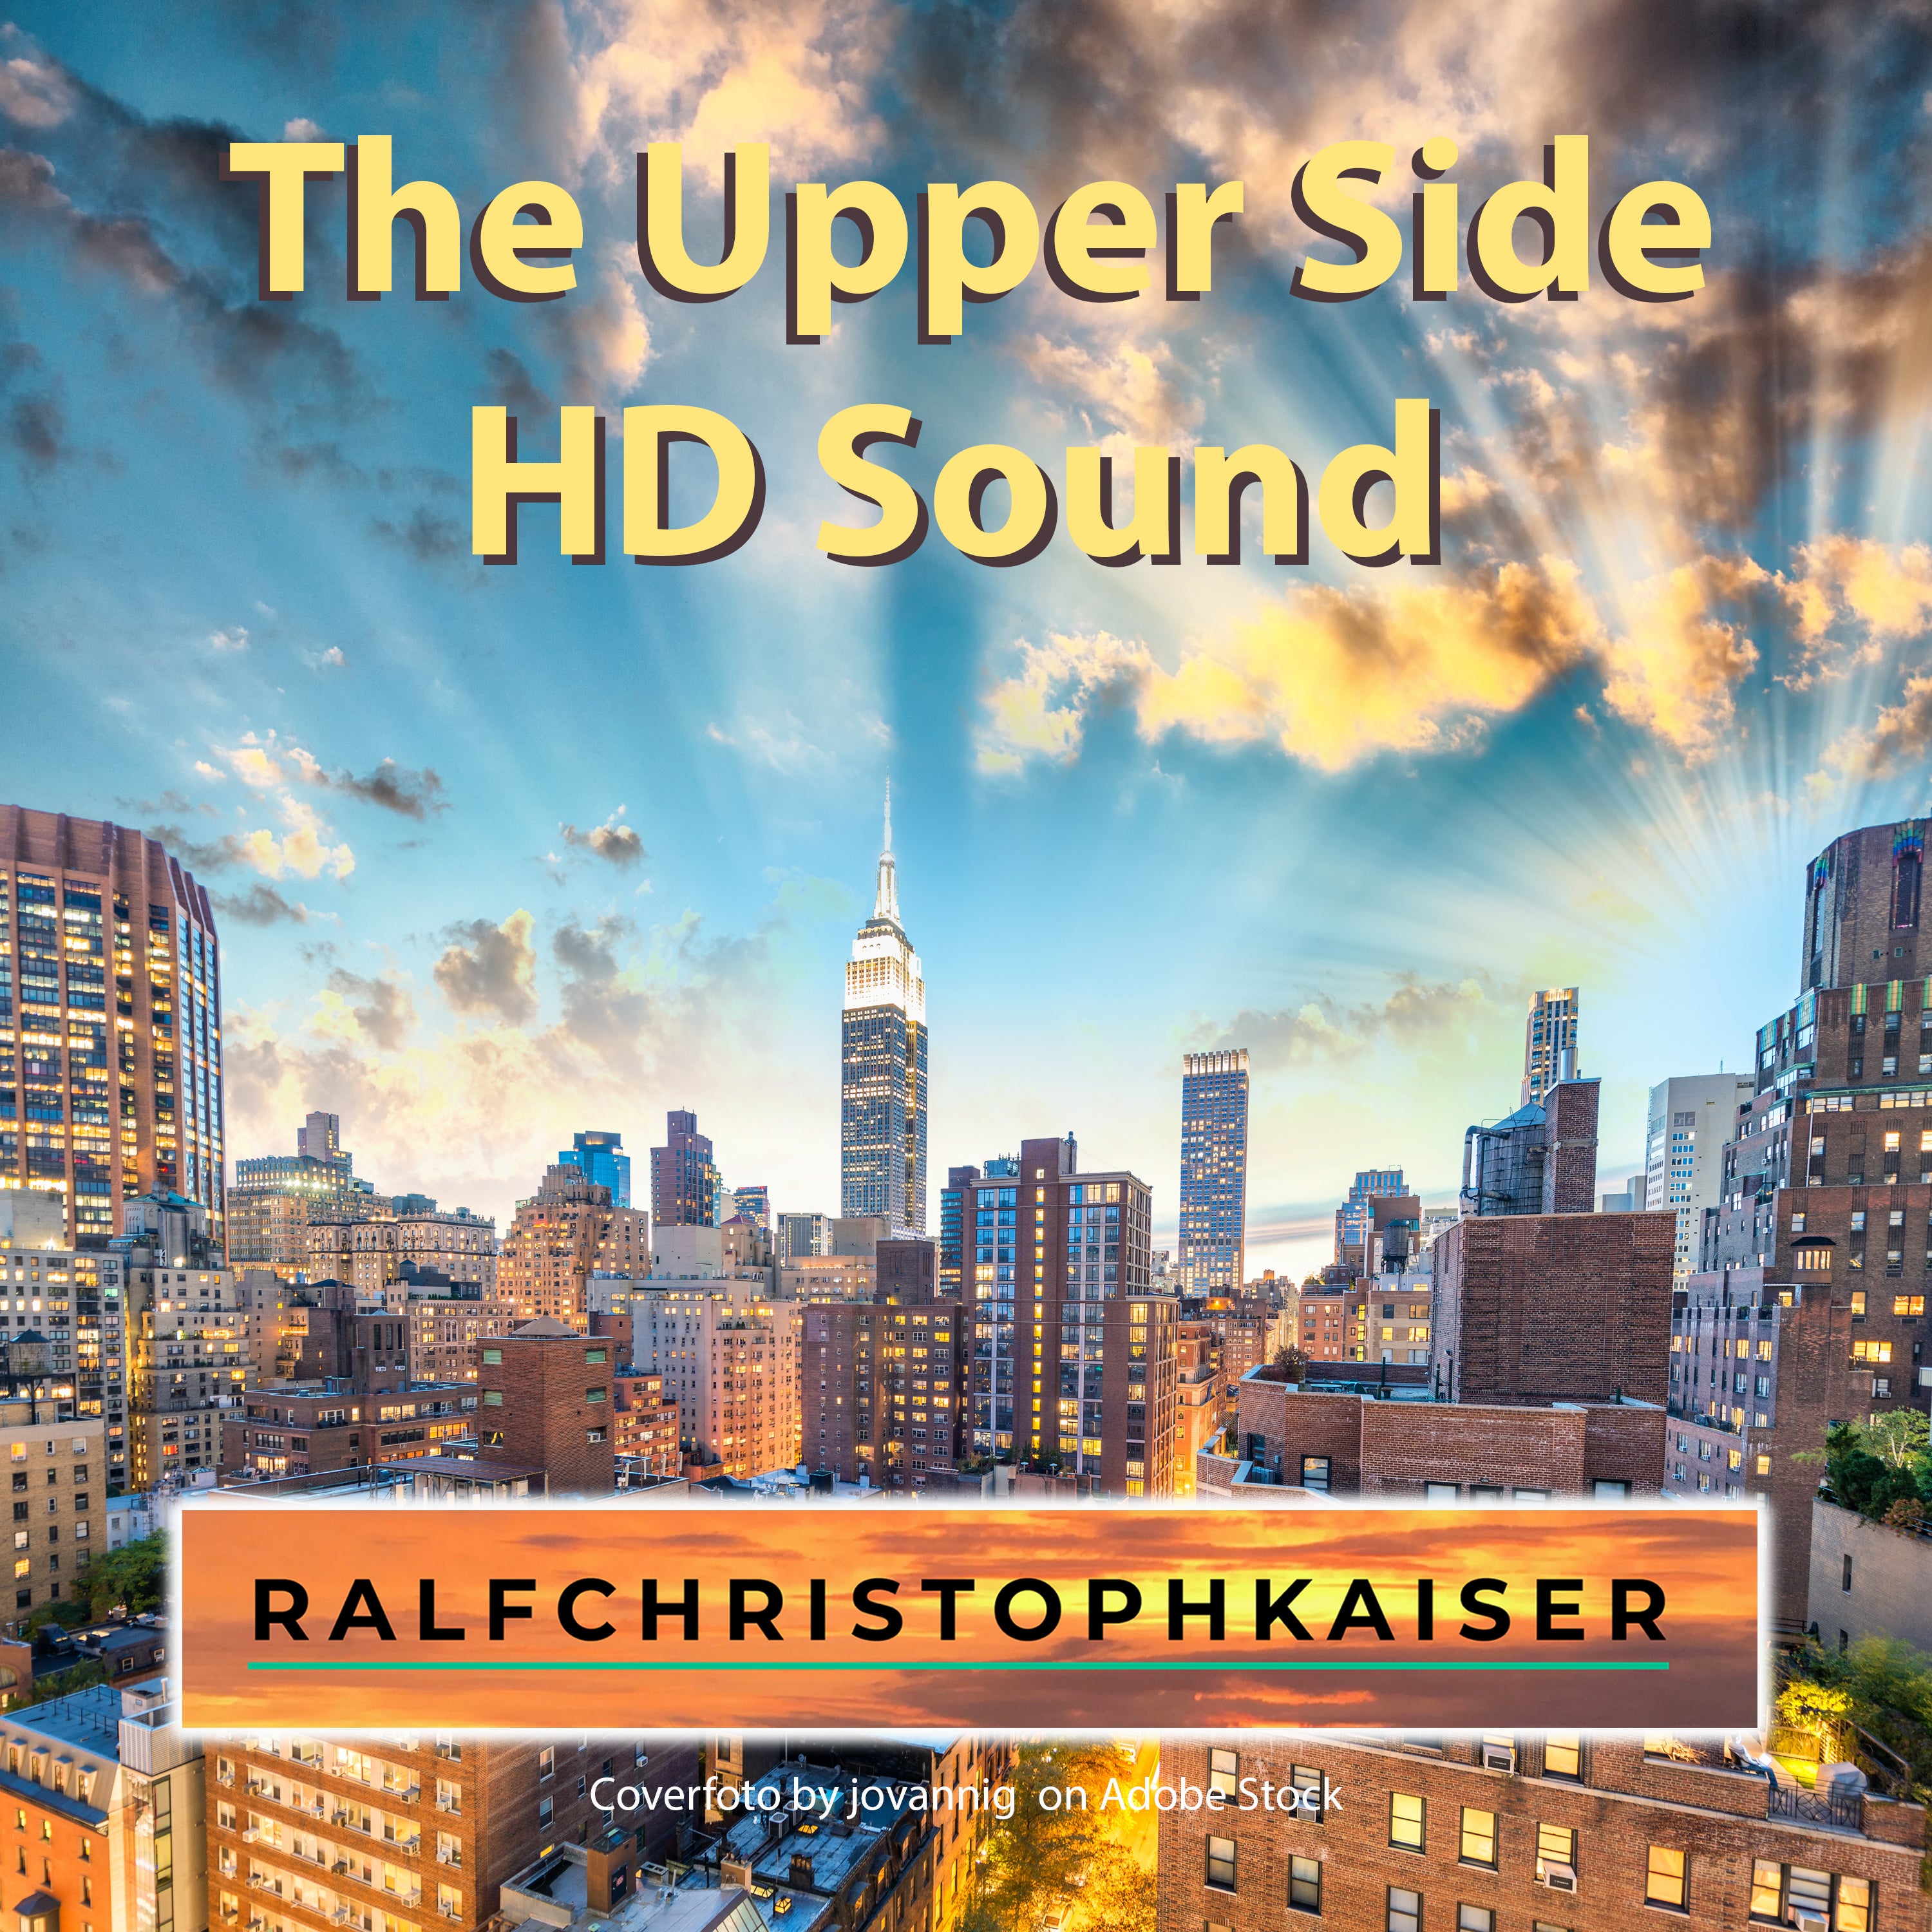 The Upper Side new Electronica EP high resolution wav files by Ralf Christoph Kaiser Full HD Sound Download - ralfchristophkaiser.com Musik und Noten